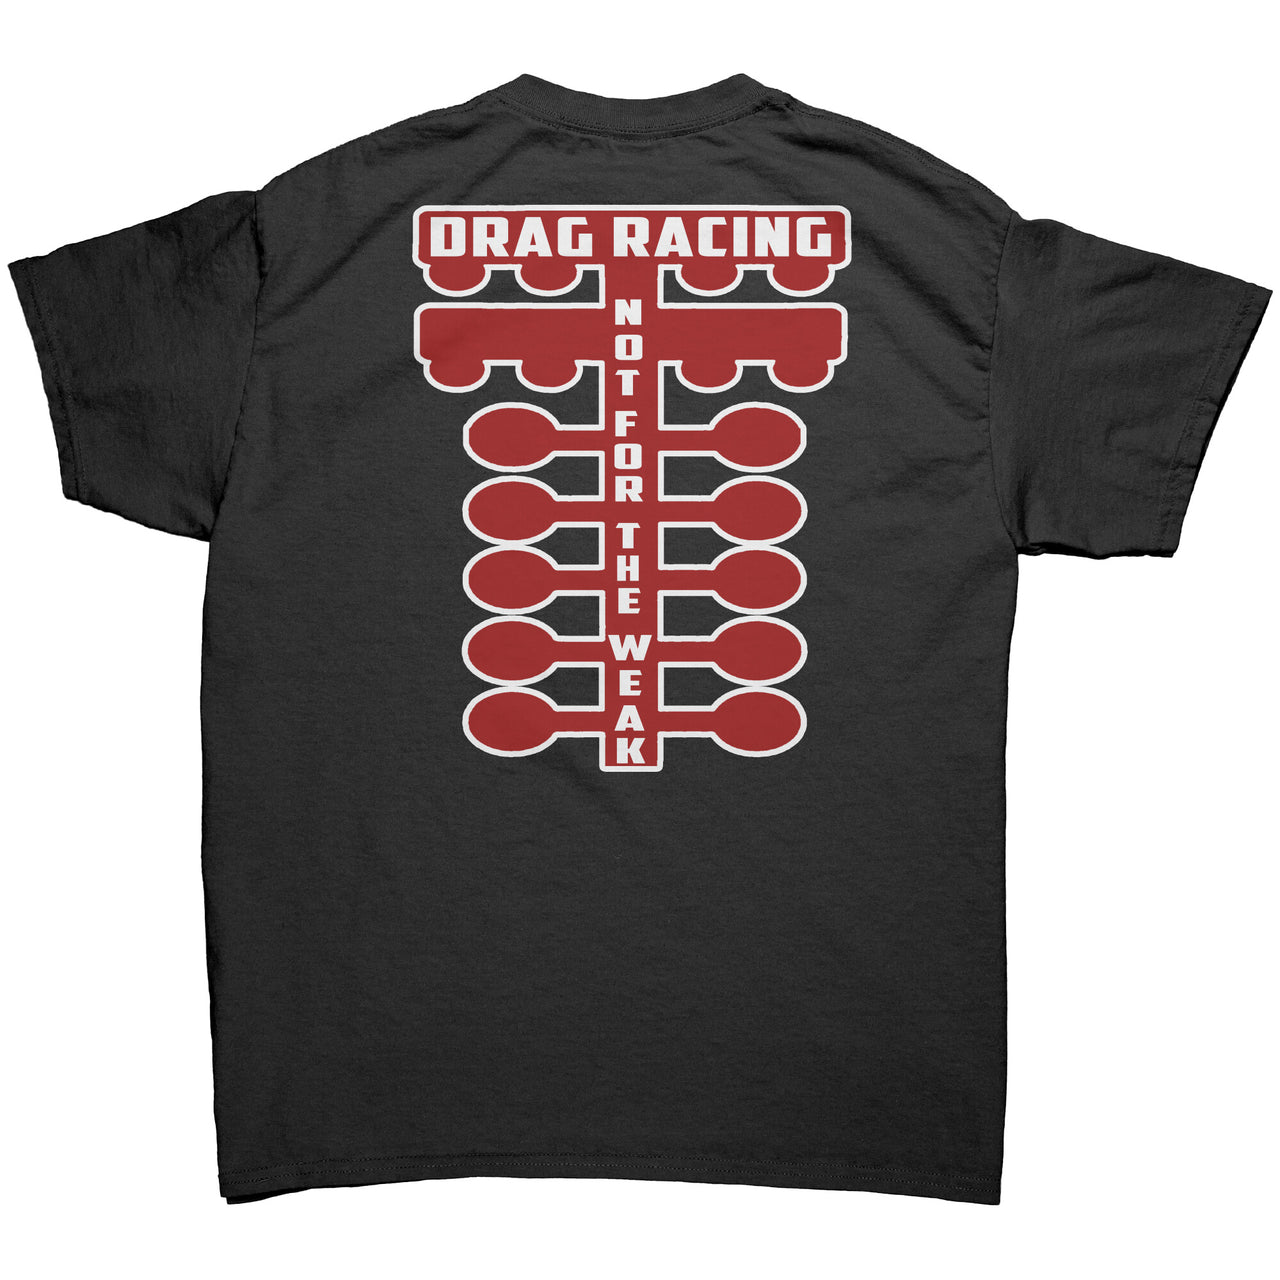 Drag Racing shirts